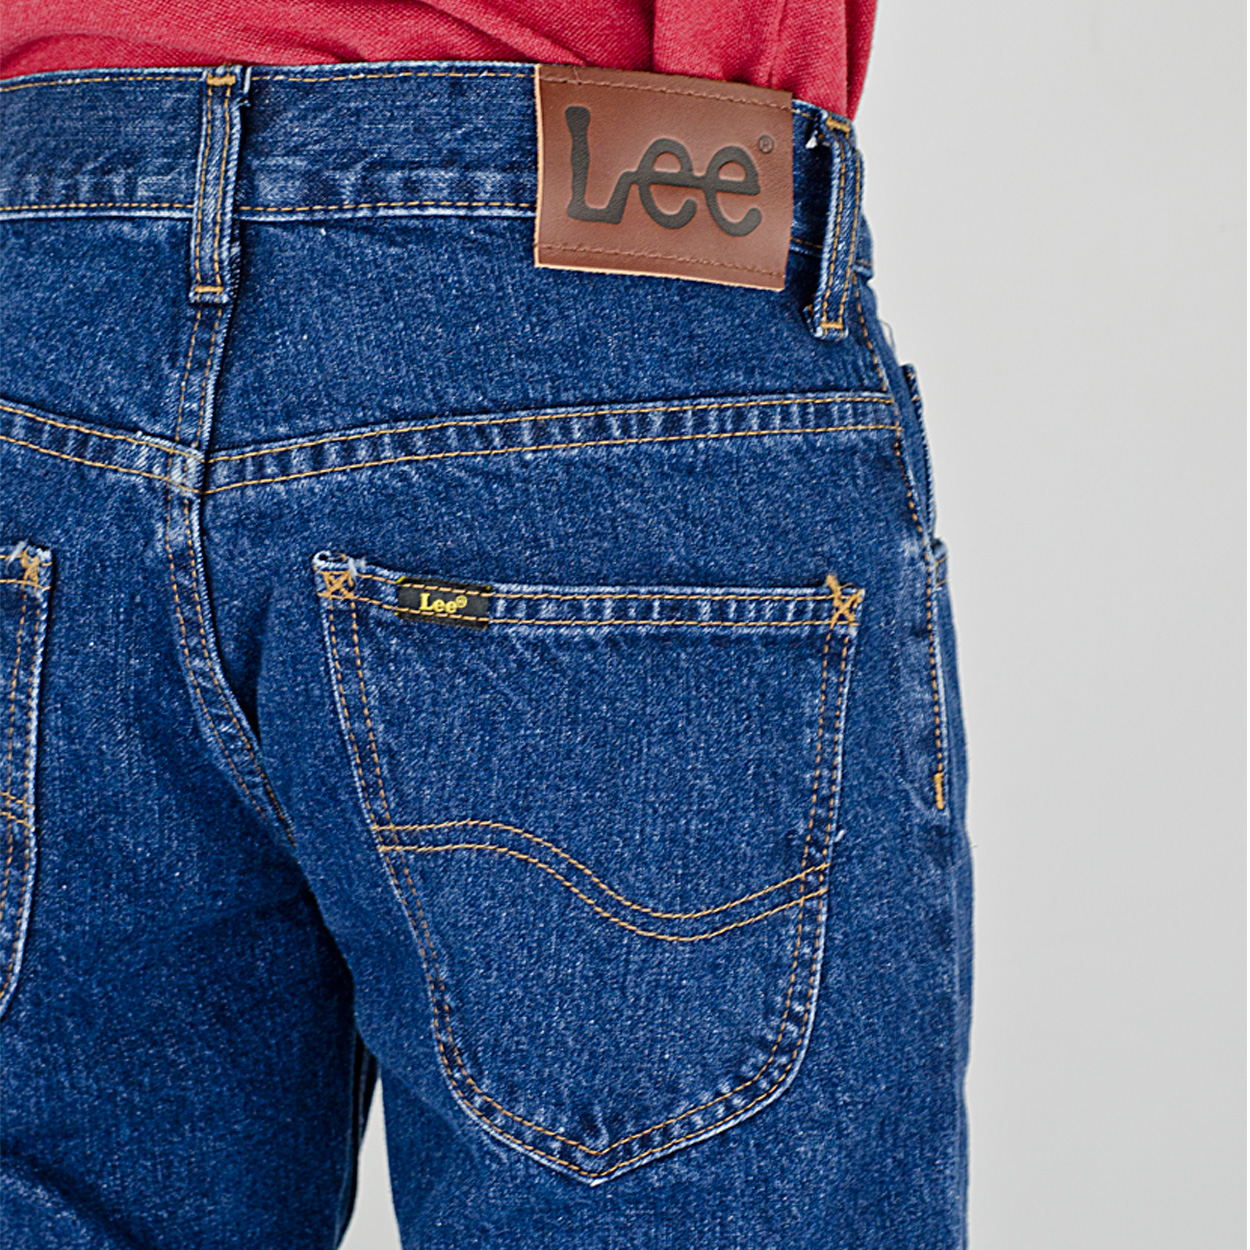 Lee Denim Jeans - Californian